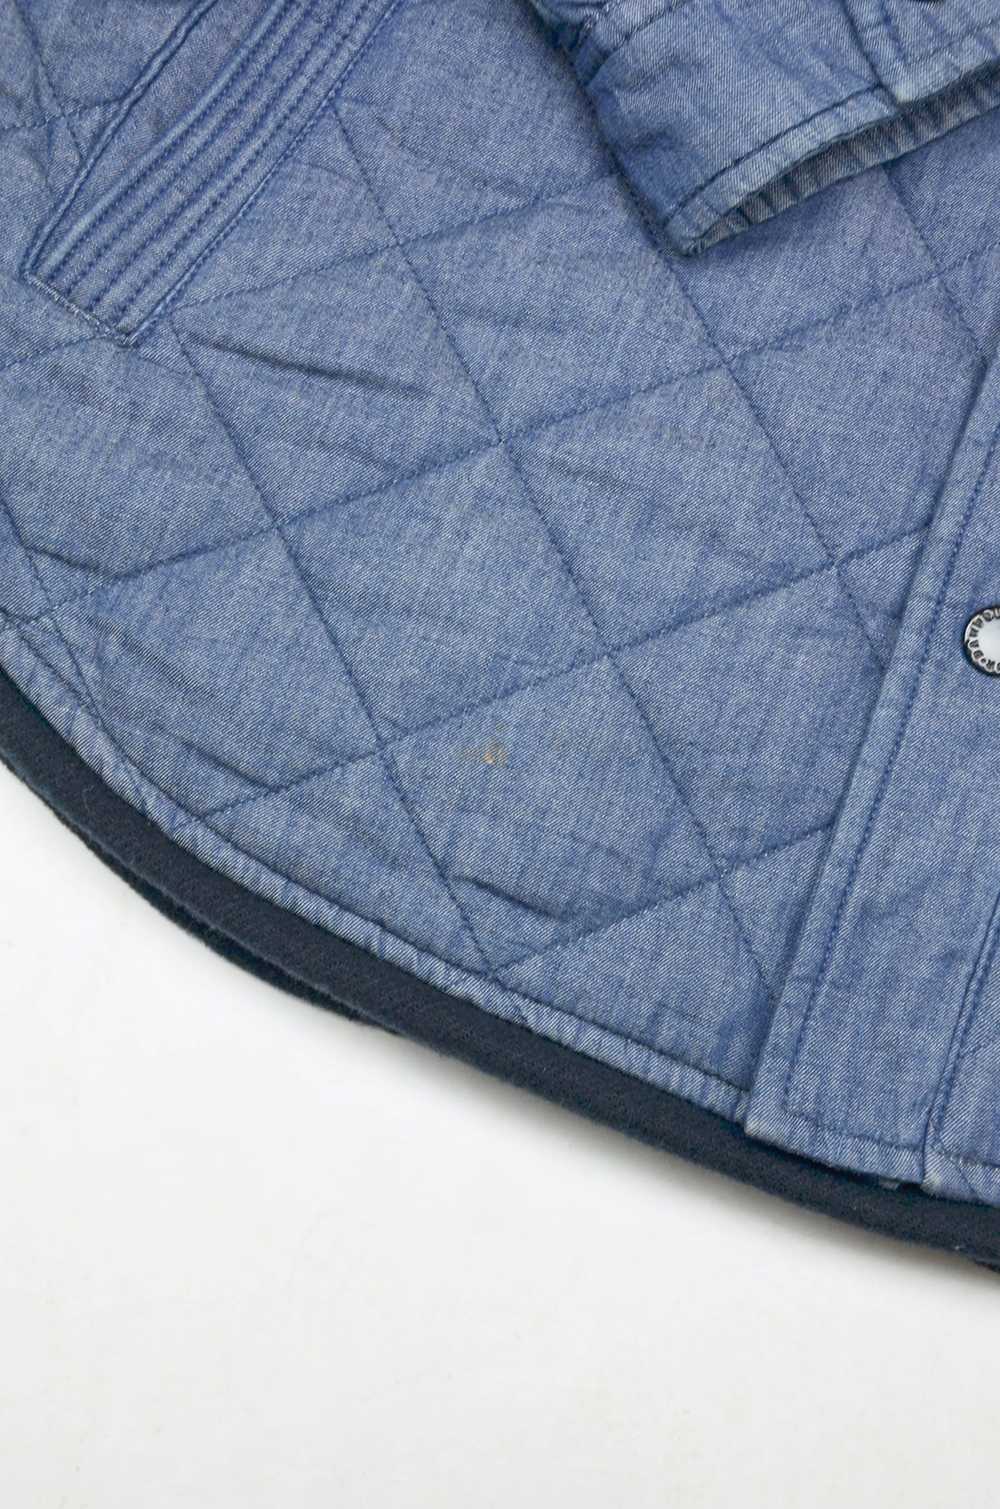 Barbour BARBOUR International Blue Quilted Jacket - image 4